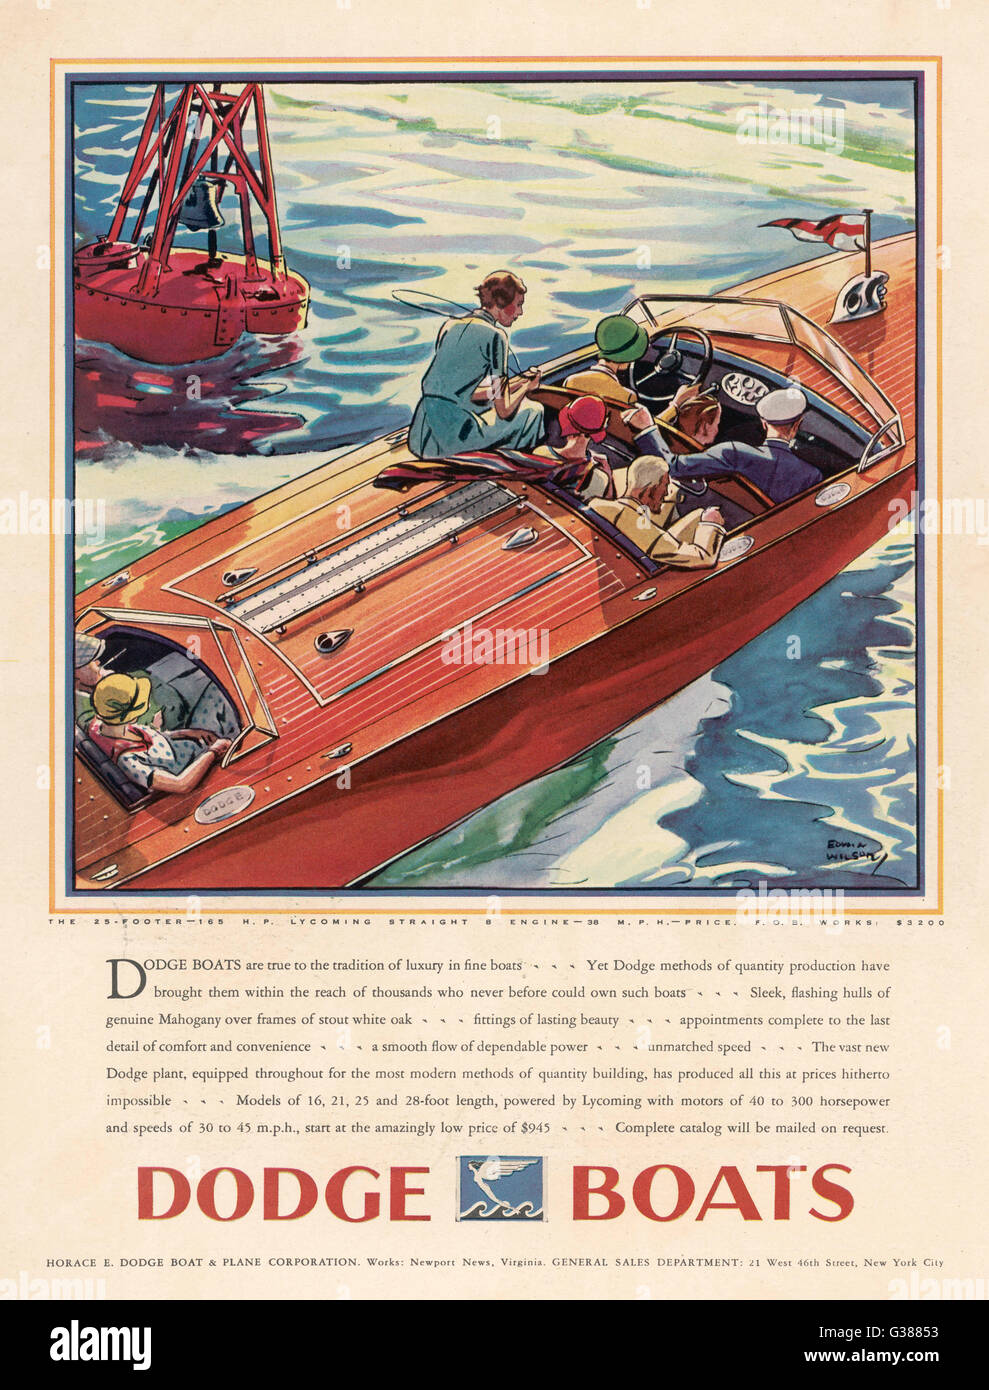 DODGE BOAT ADVERT/1930 Stock Photo